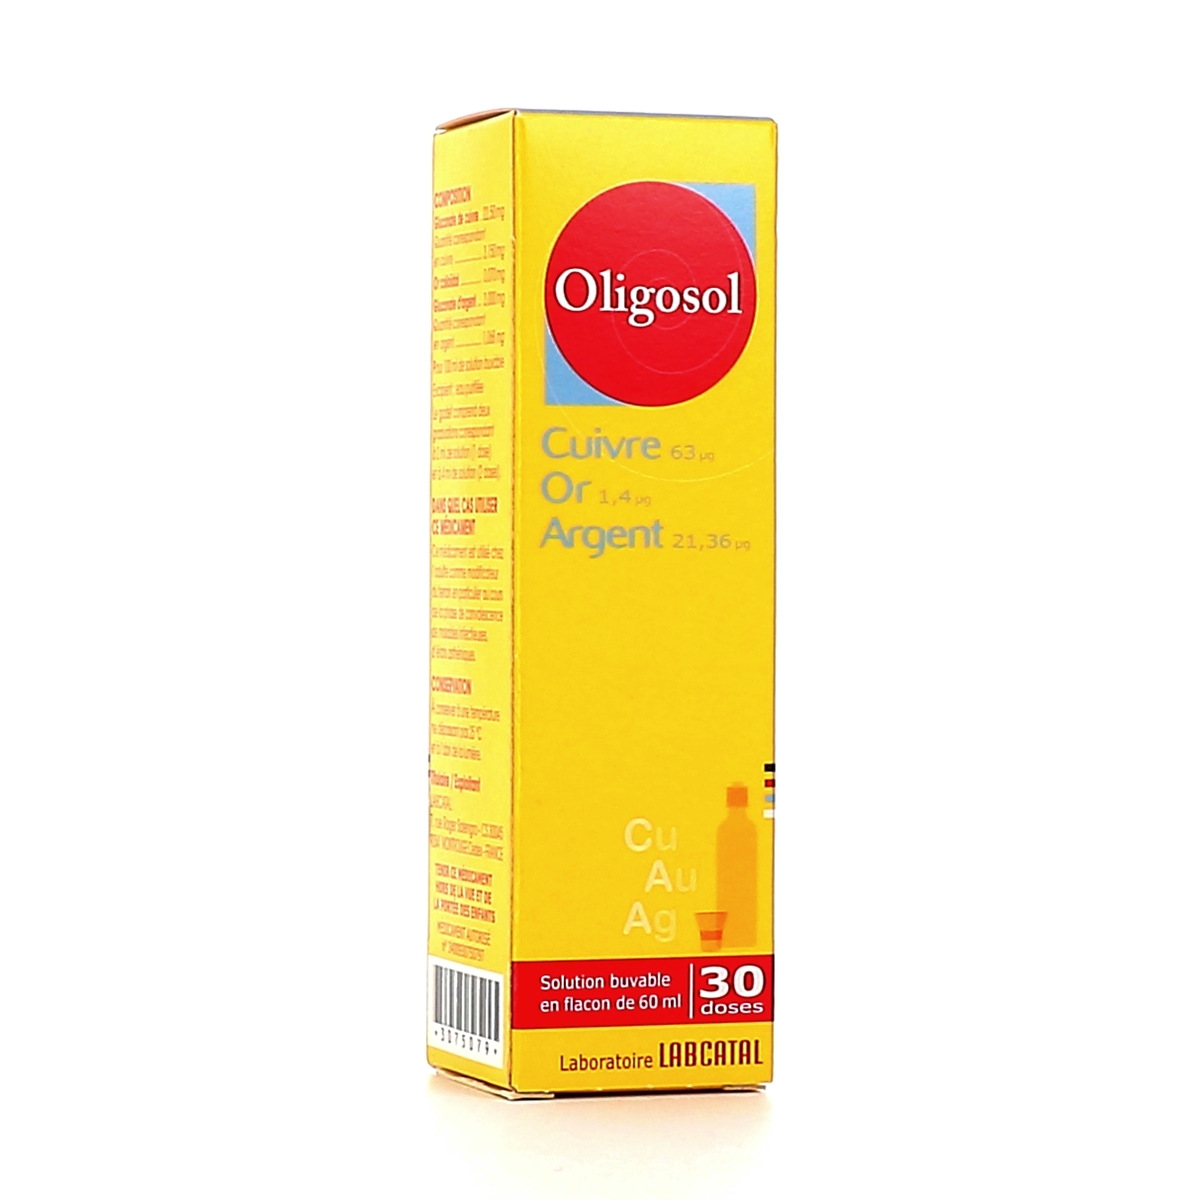 Oligosol Cuivre Or Argent 30 Doses 60ml